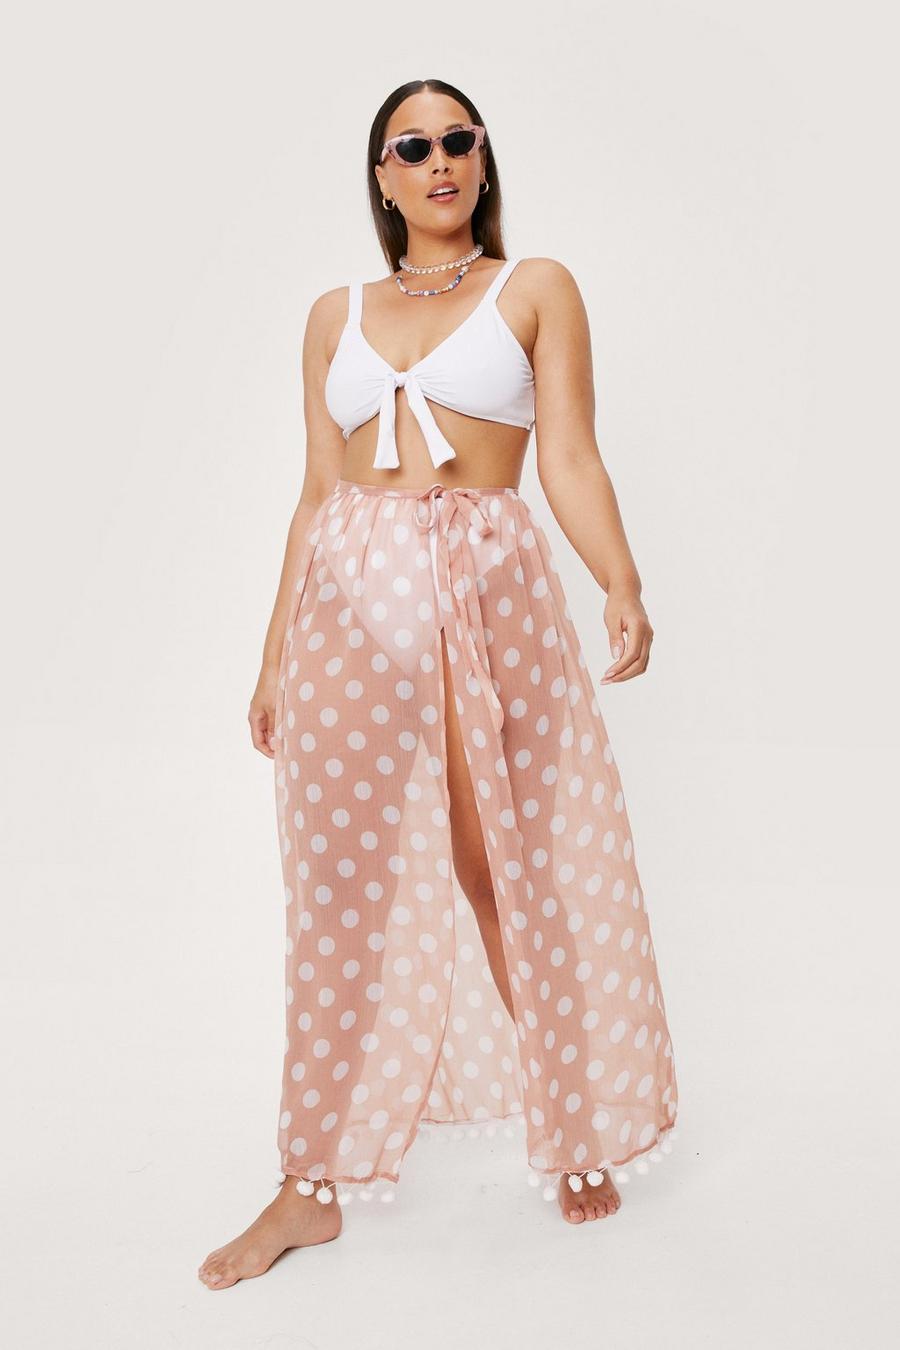 Plus Size Sheer Polka Dot Maxi Beach Skirt